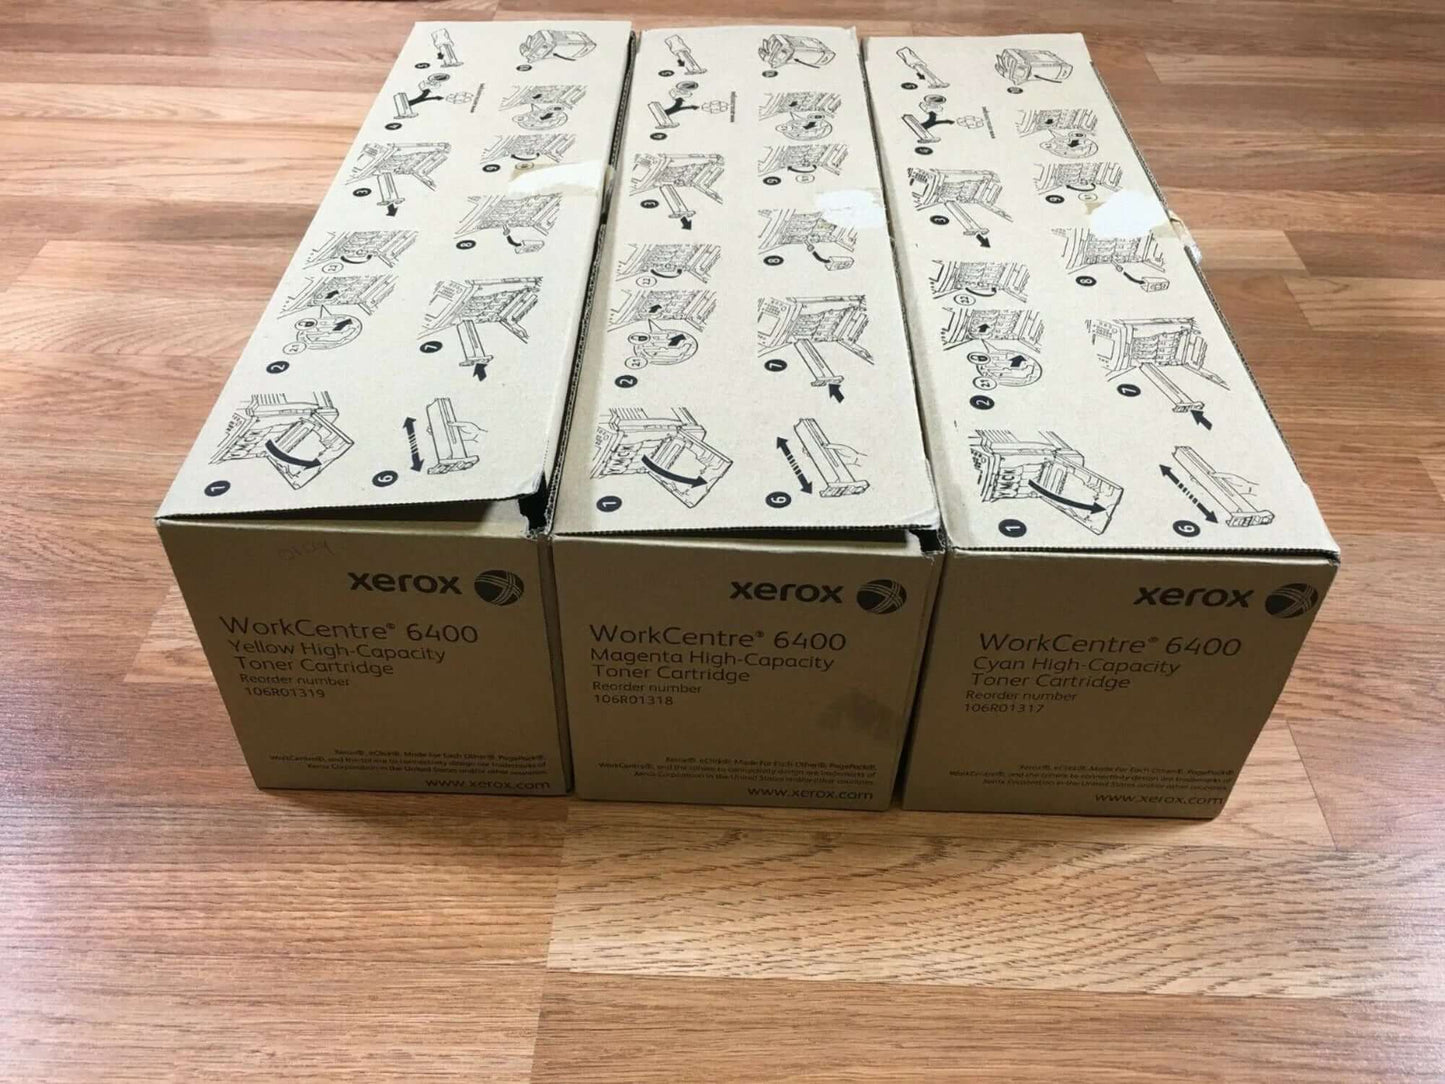 3 New Open Box Xerox WC 6400 CMY Toner Set 106R01317-19 FedEx 2Day Air!! - copier-clearance-center